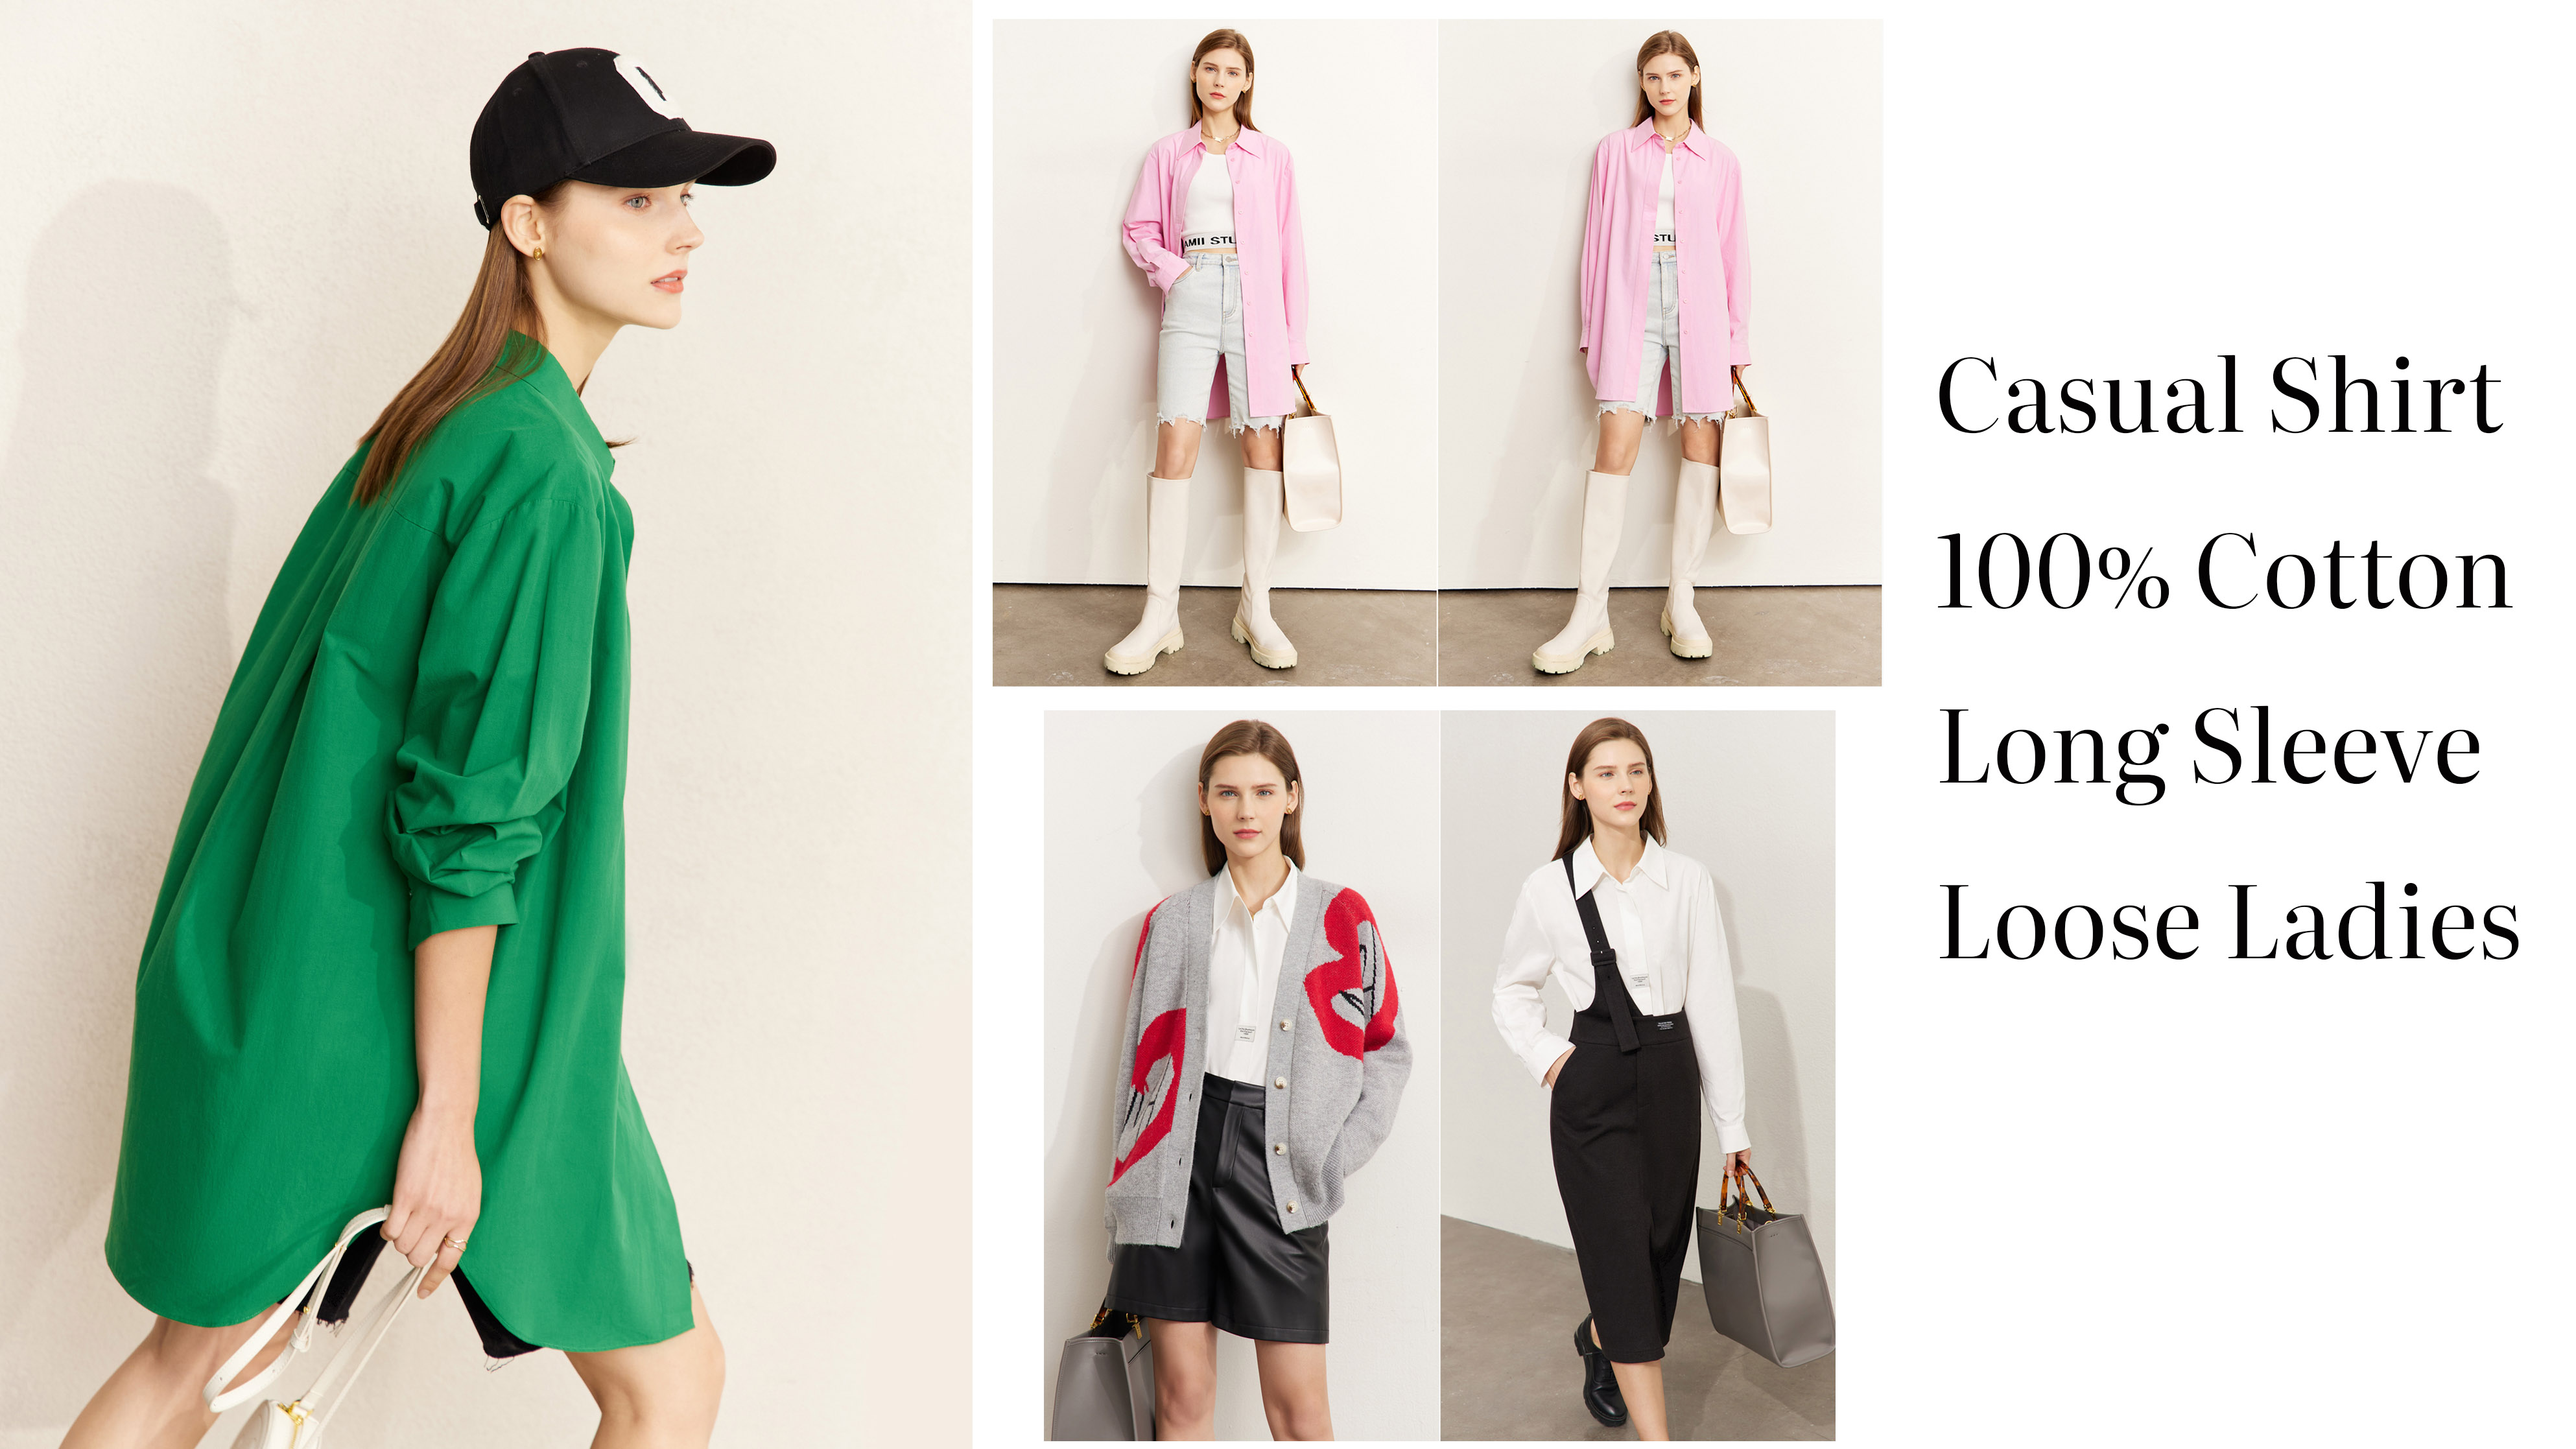 Customized Casual Shirt 100% Cotton Long Sleeve Loose Ladies ຜູ້ຜະລິດຈາກປະເທດຈີນ |Auchalink